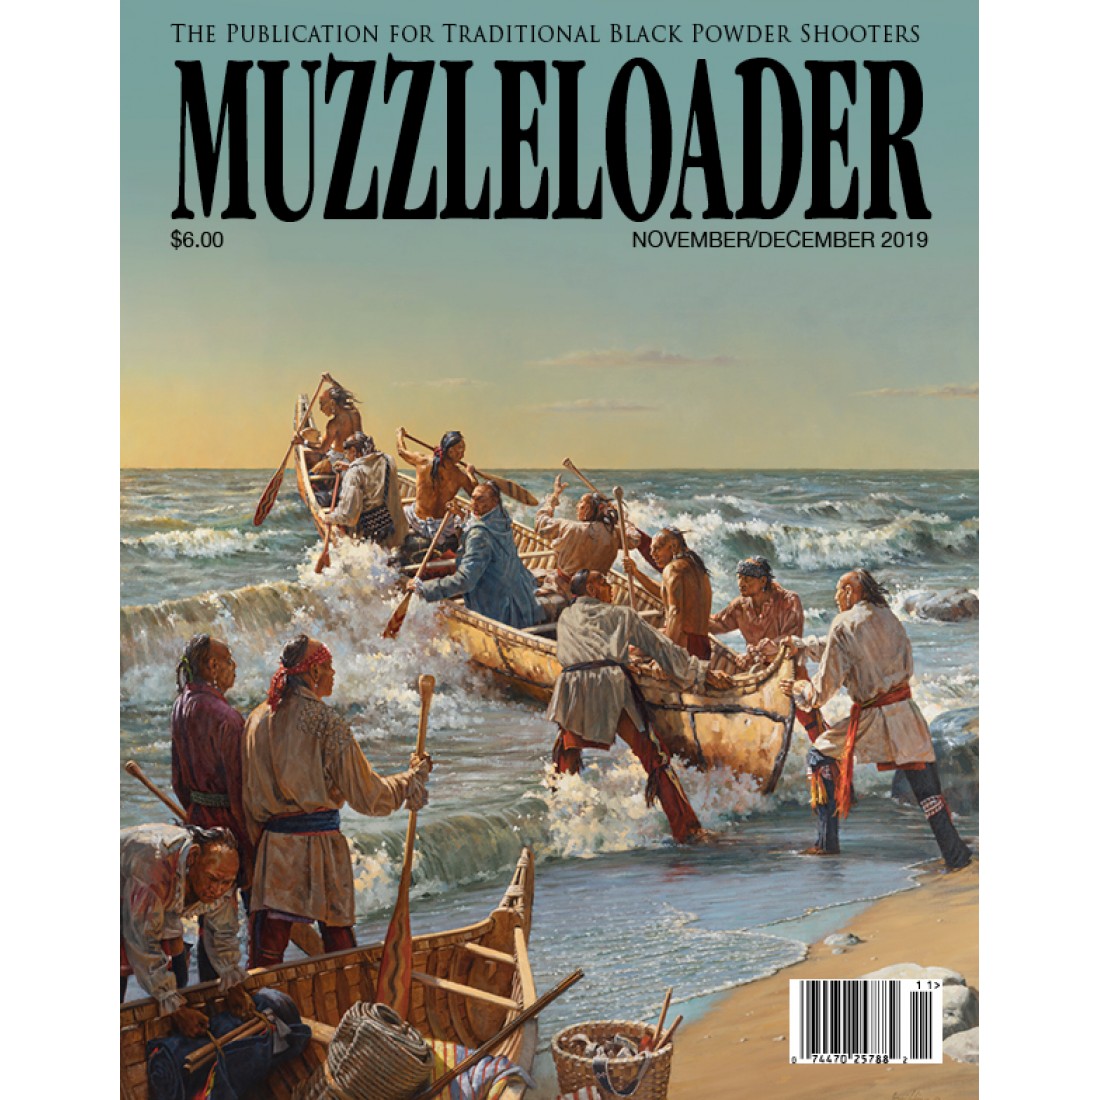 Muzzleloader Magazine Subscriber Services